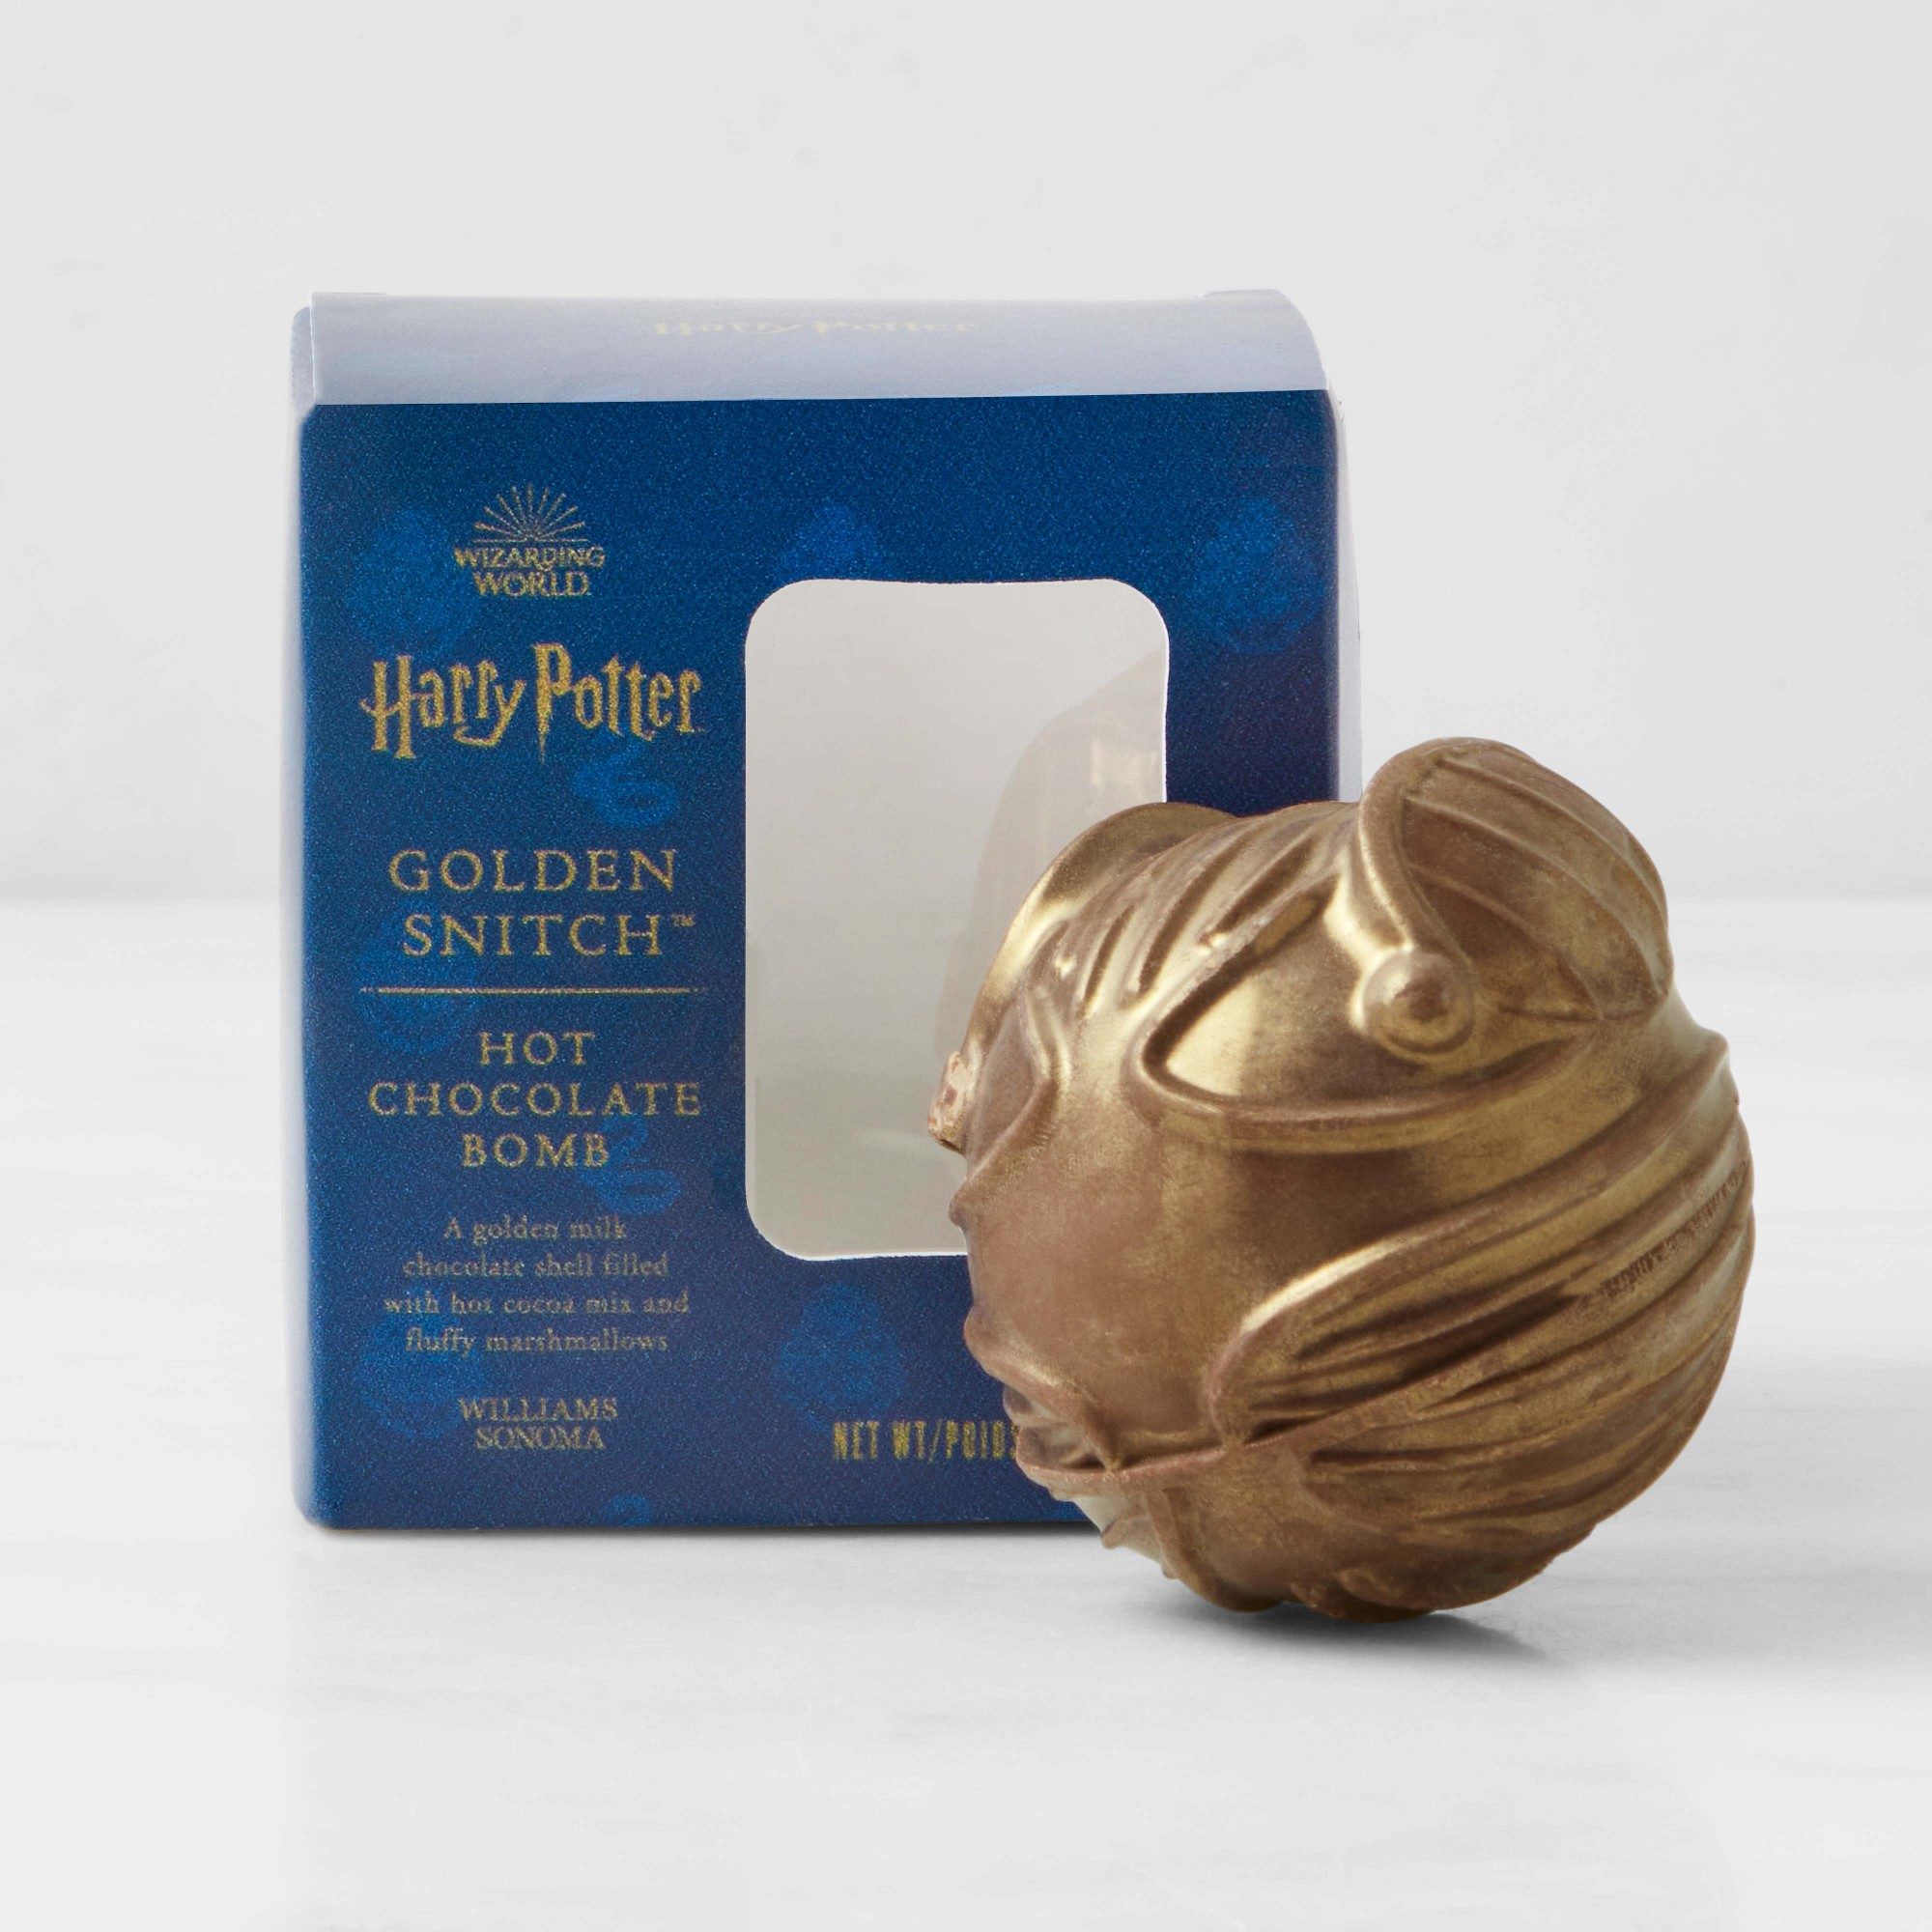 Harry Potter Snitch Hot Chocolate Ecomm Via Williams Sonoma.com